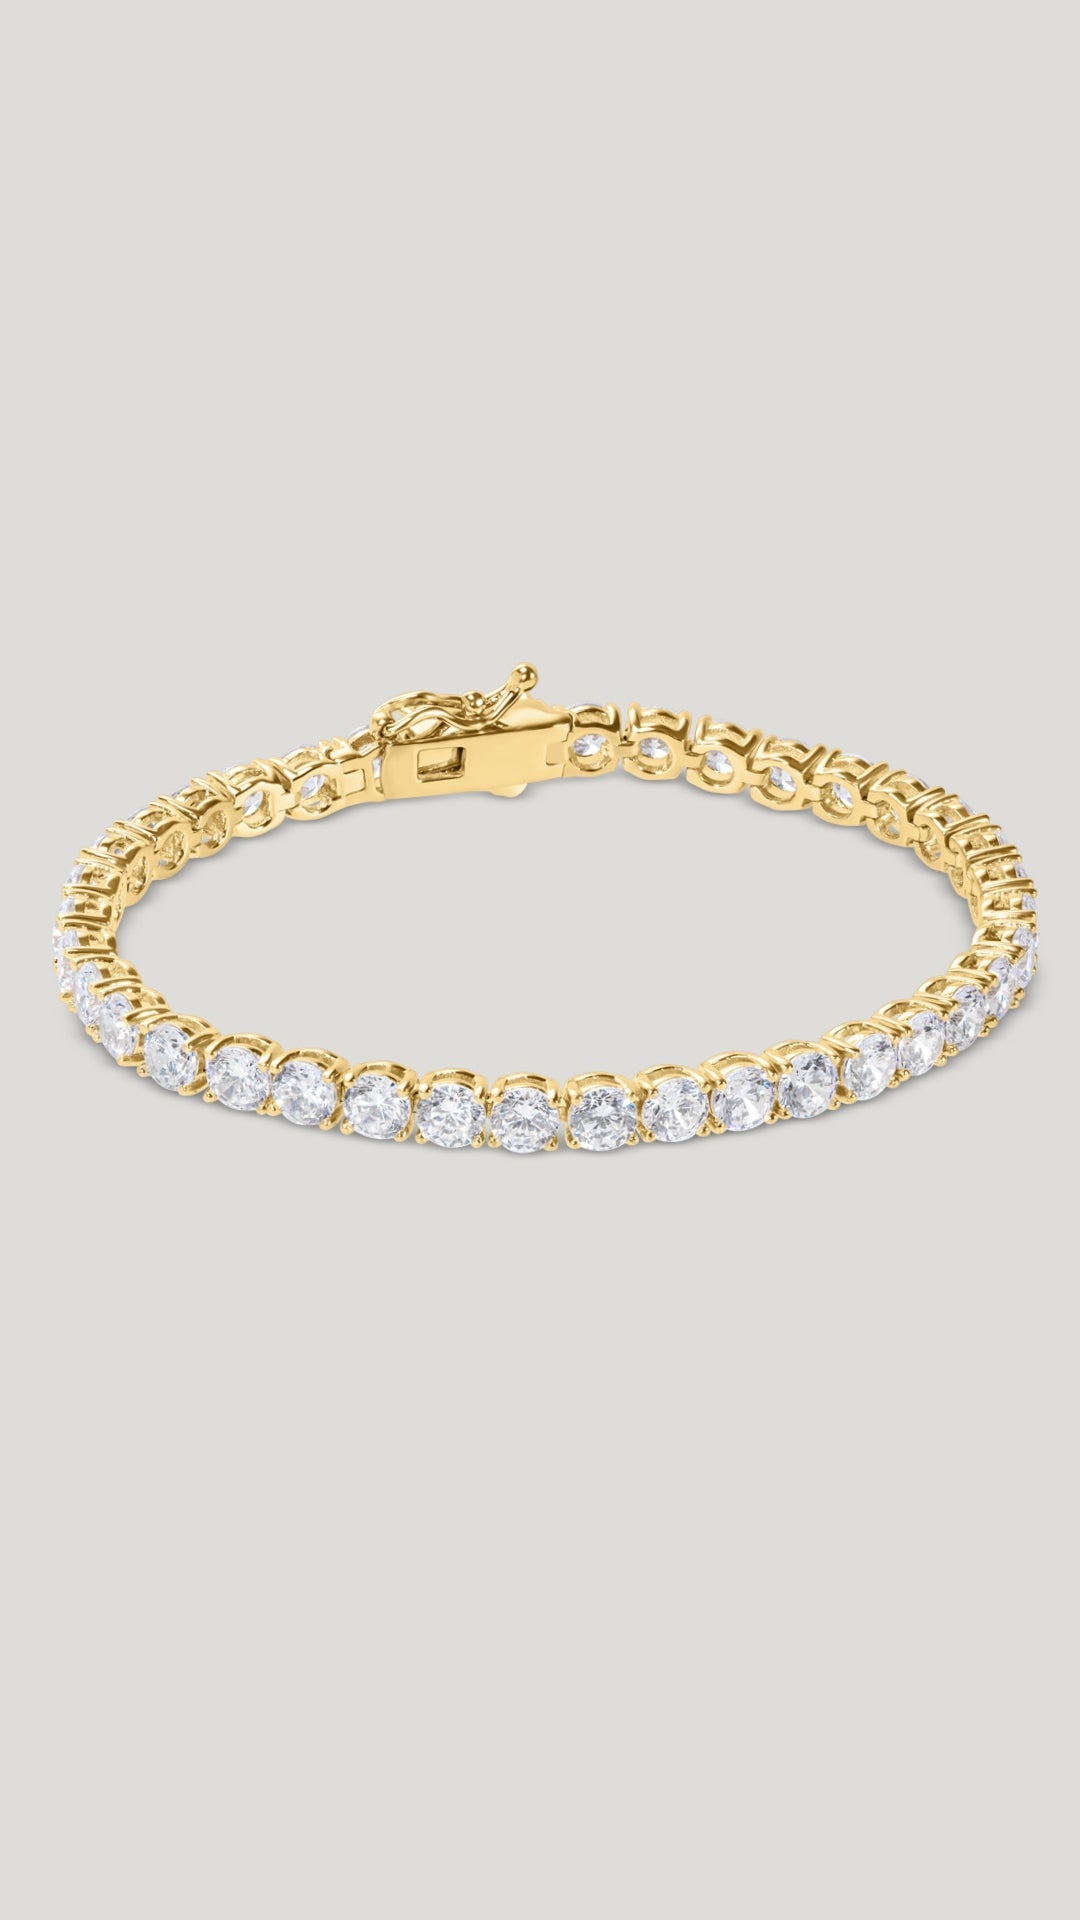 Hailey Round Prong Tennis Bracelet 18K Gold Vermeil